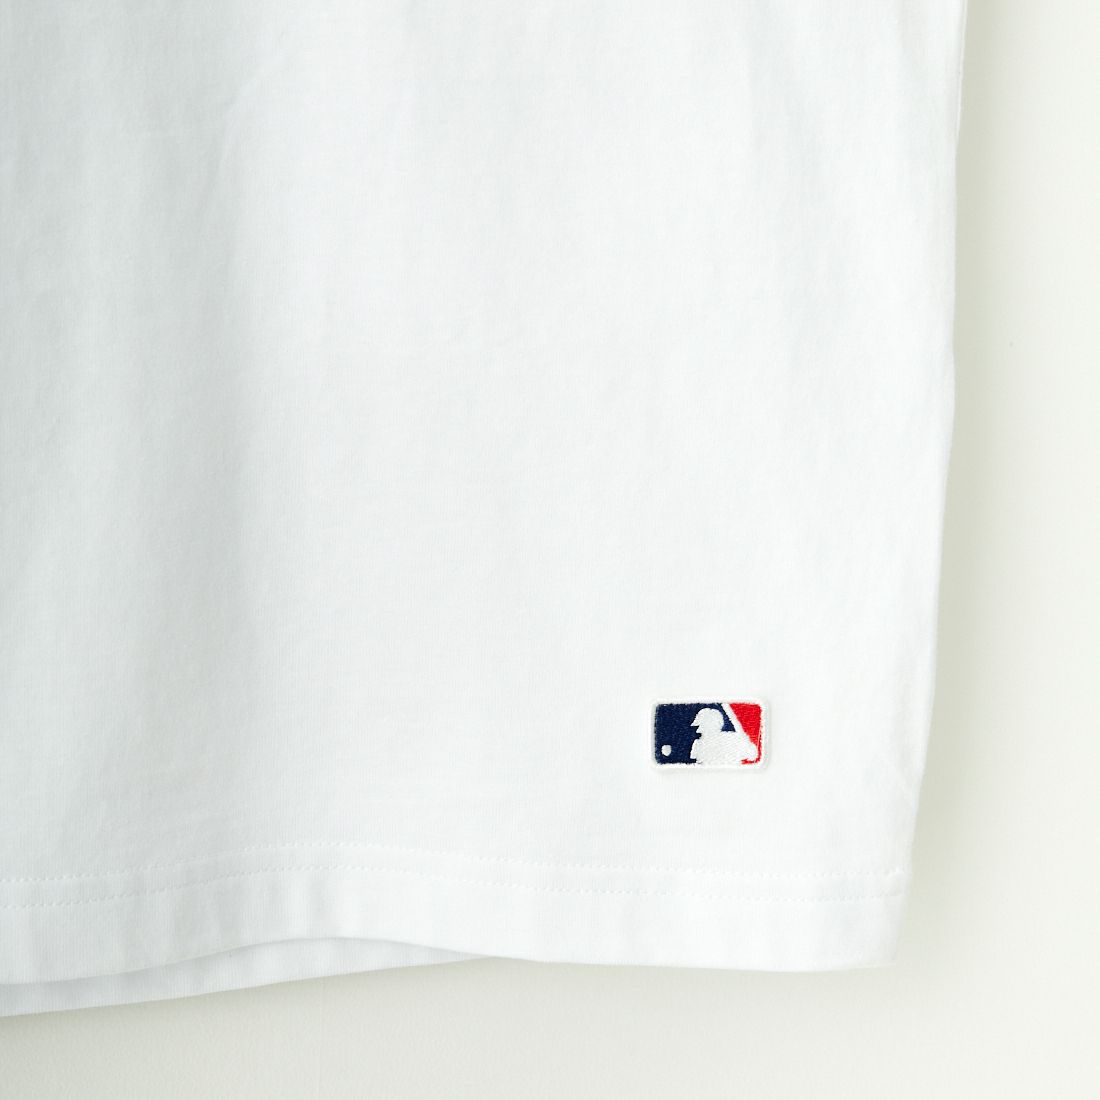 Fanatics [ファナティクス] 別注 MLBワンポイント刺繍ロゴ ショートスリーブTシャツ [ML0122SS0012-JF] WHITE